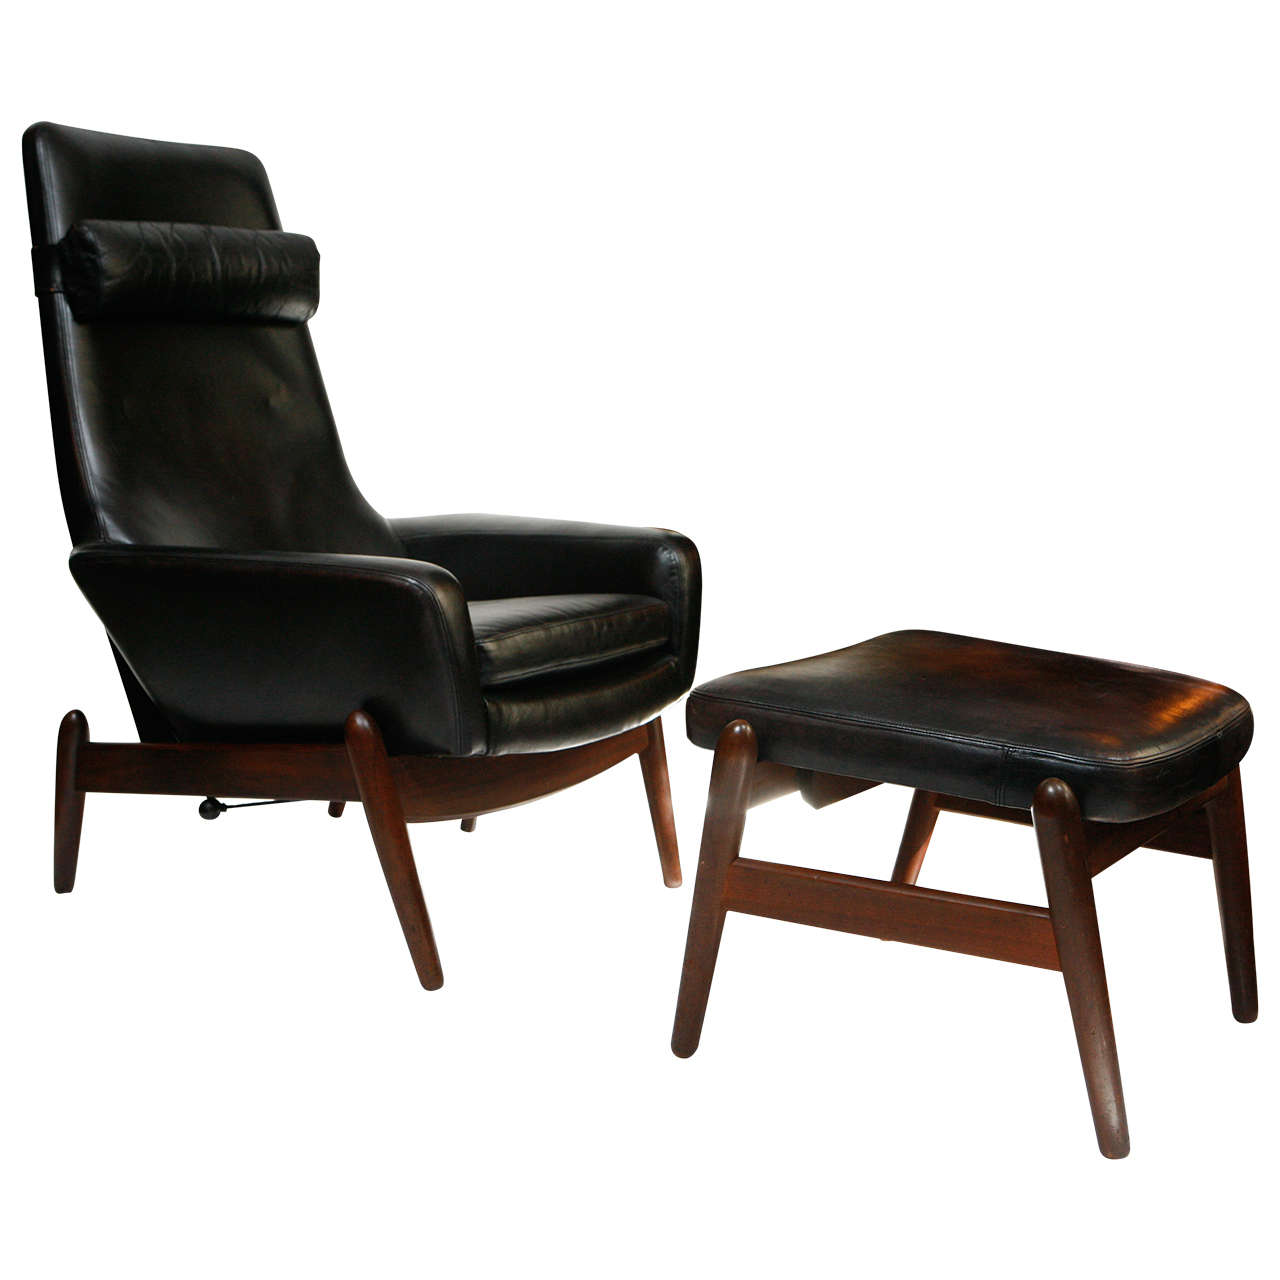 Ib Kofod-Larsen Lounge Chair and Ottoman, Denmark, circa 1960